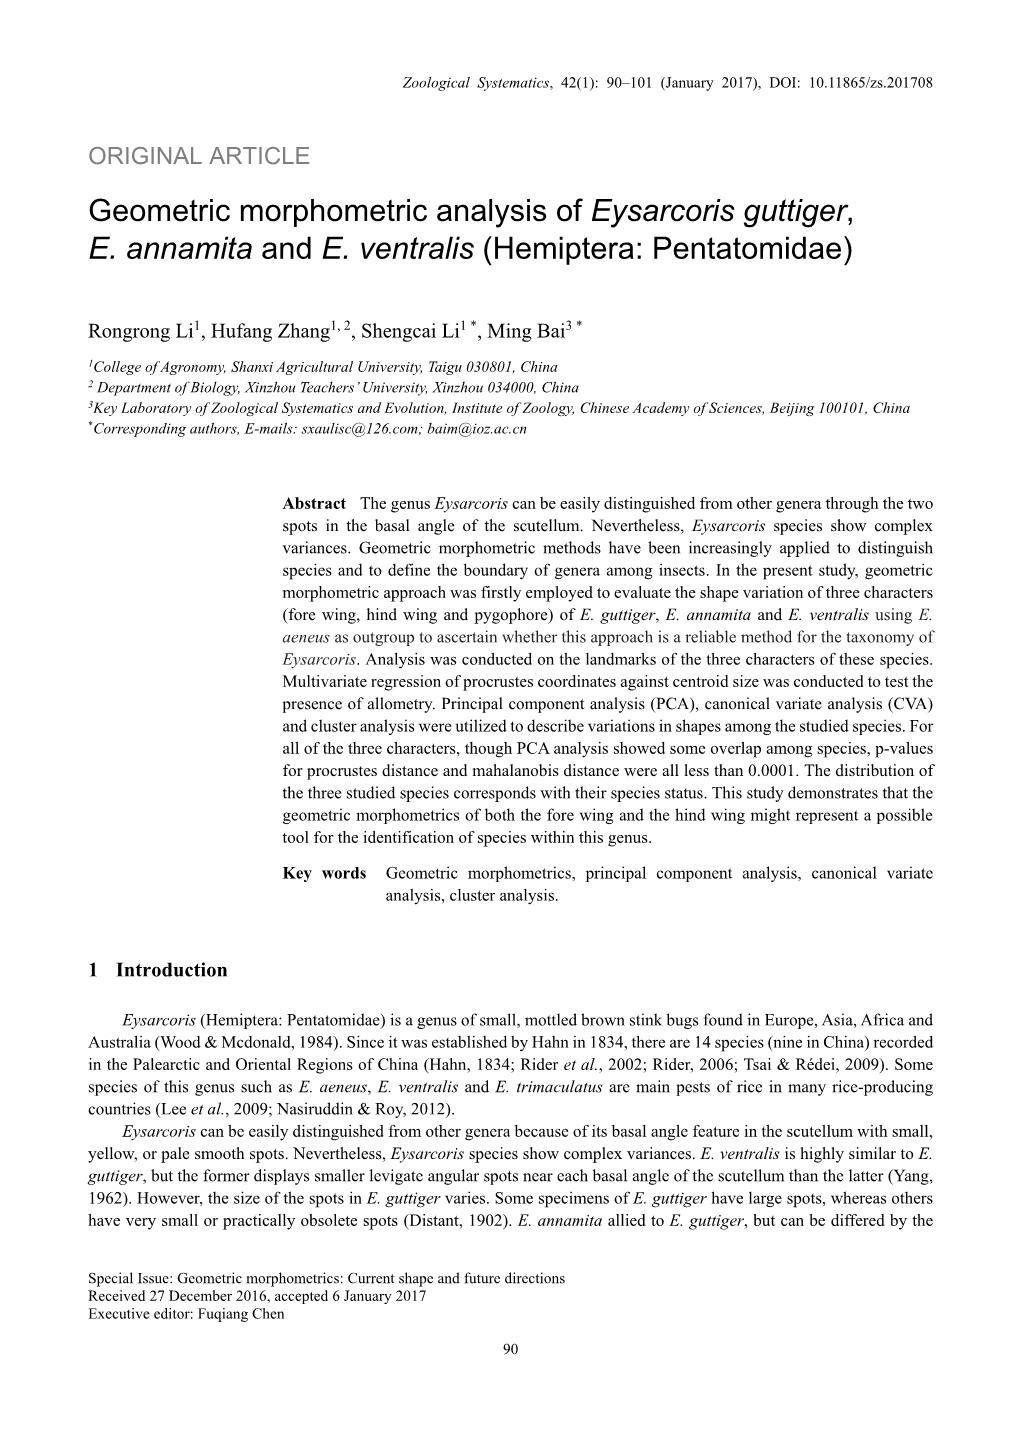 Geometric Morphometric Analysis of Eysarcoris.Pdf